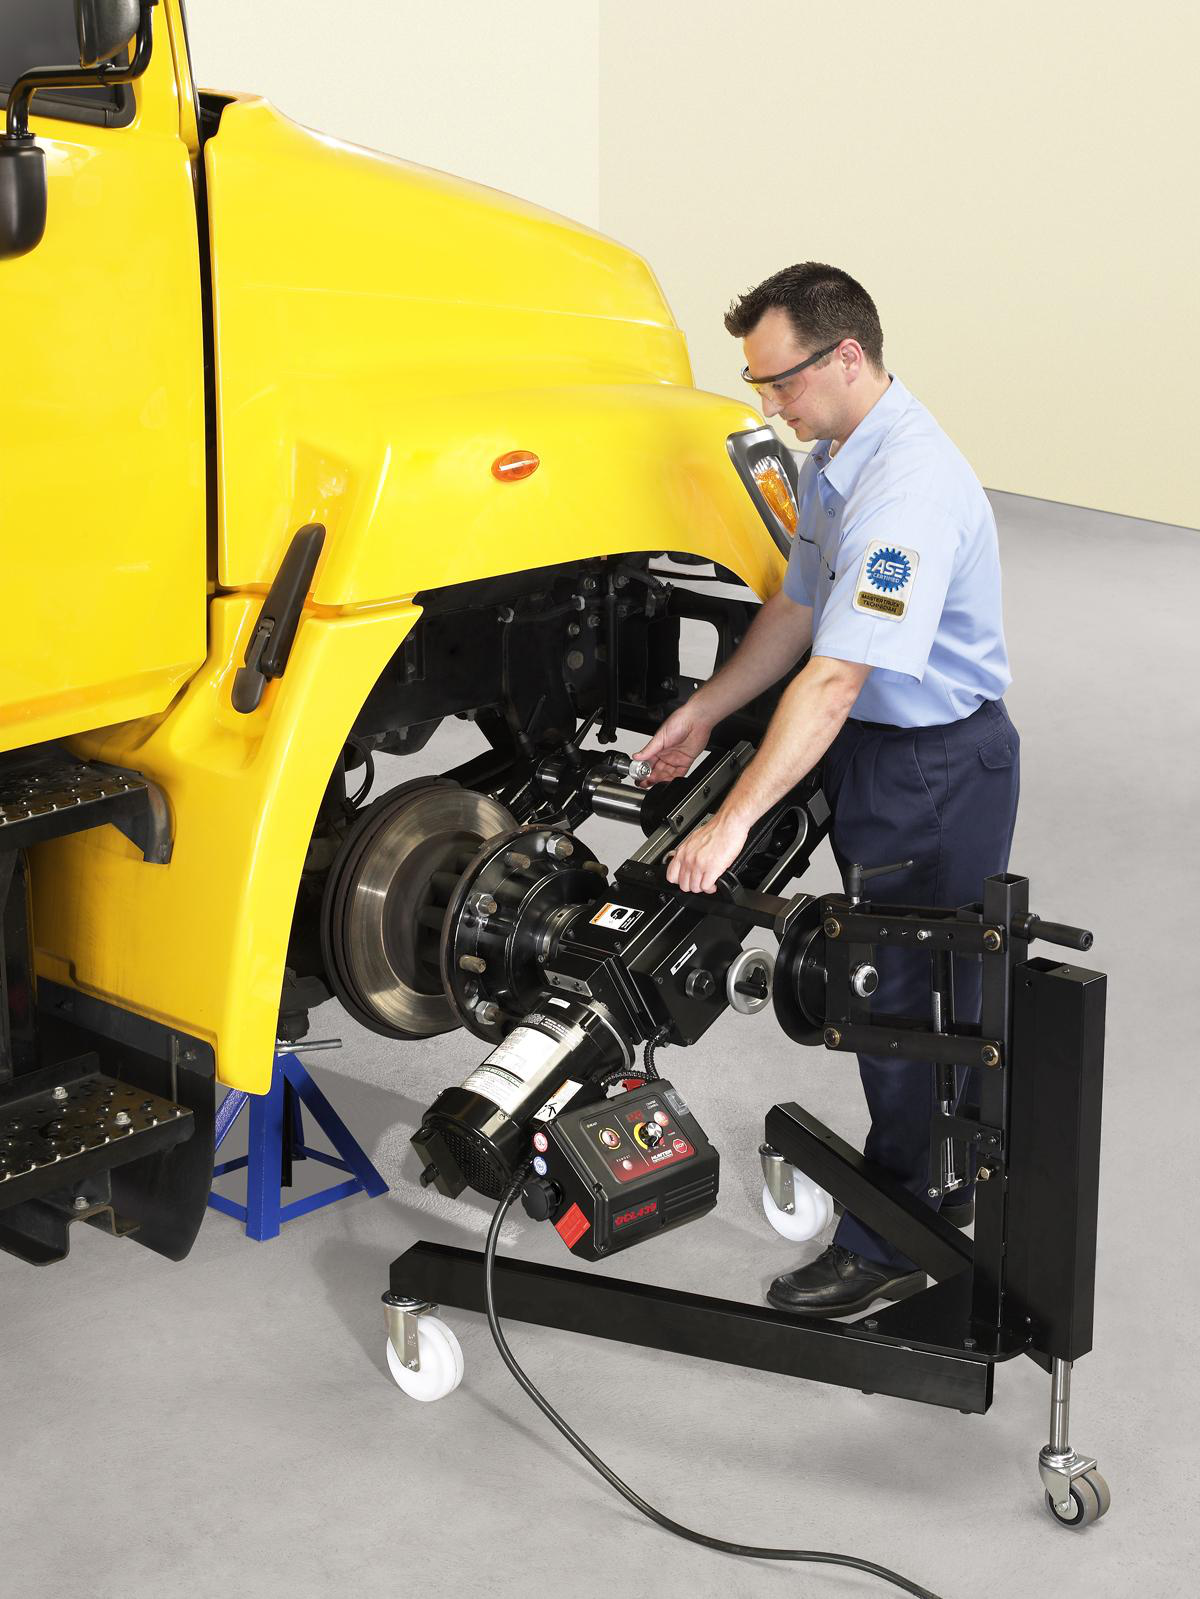 Hunter designs rotor lathe for heavy-duty brake service